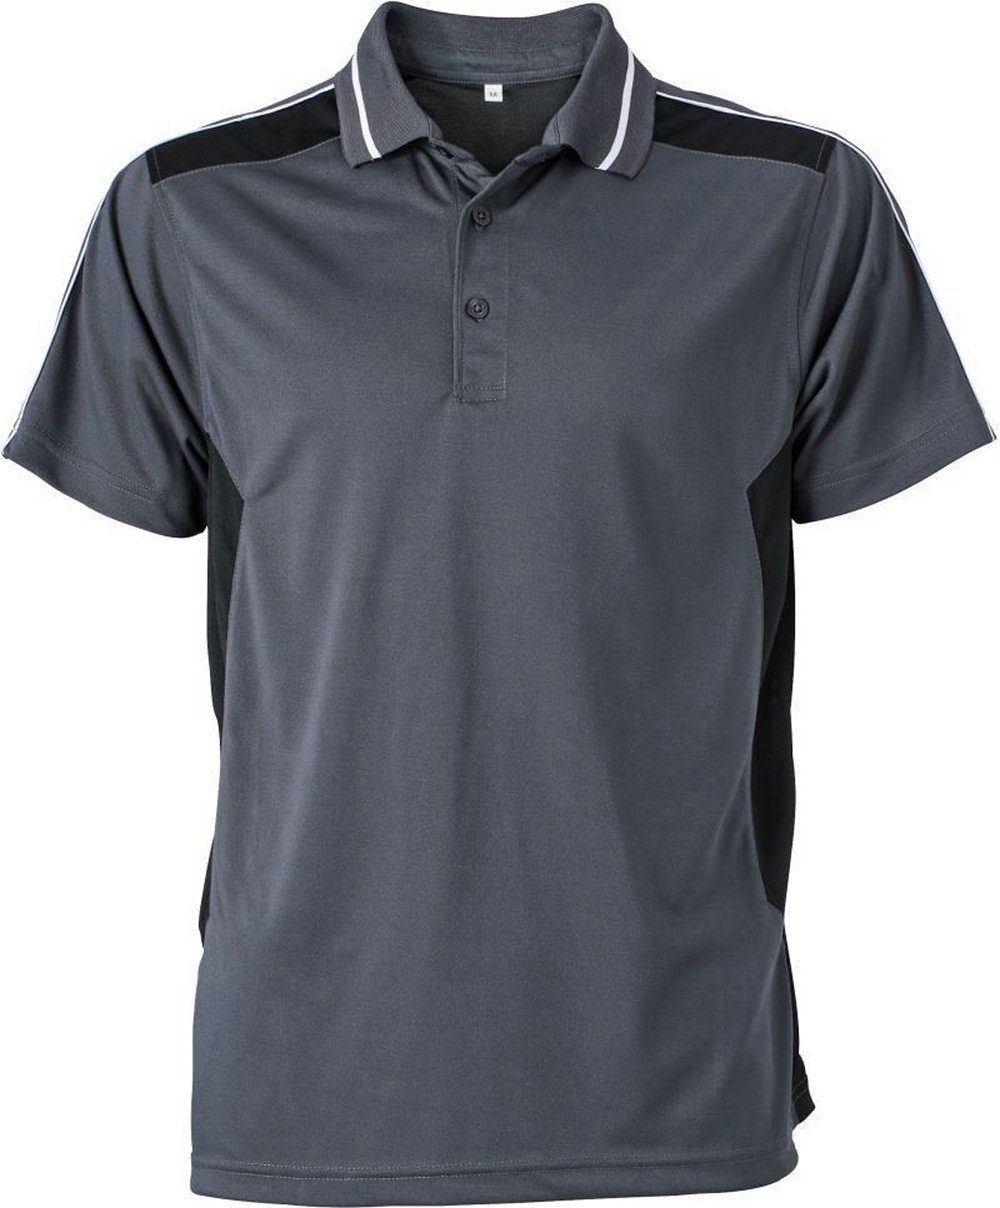 James & Nicholson Poloshirt JN Workwear grün 828 Piqué Herren Polo